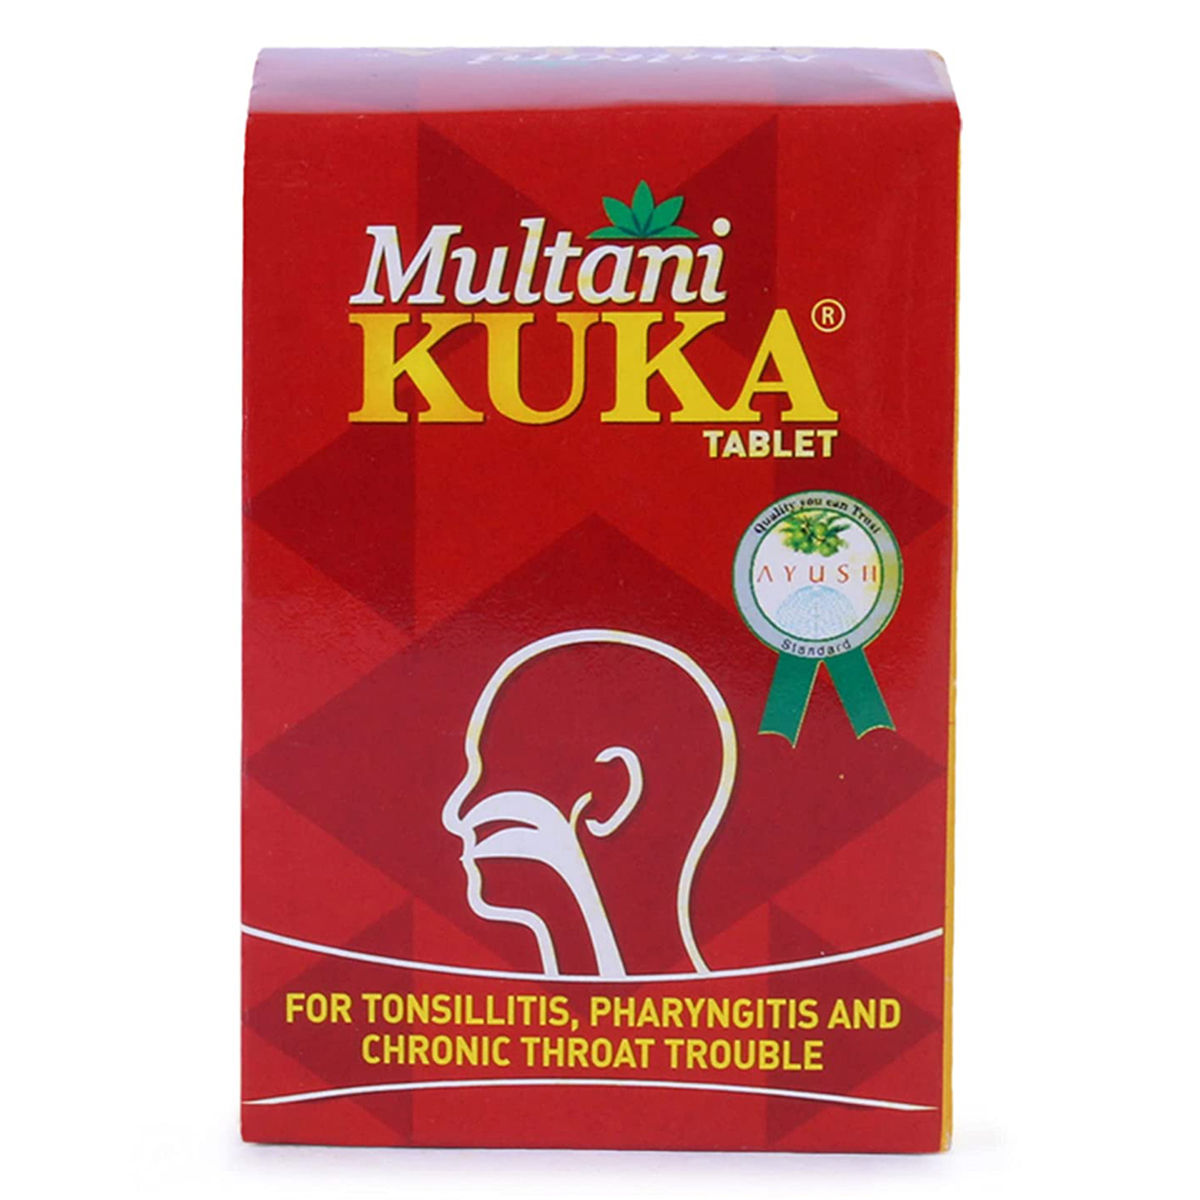 Buy Multani Kuka, 50 Tablets Online